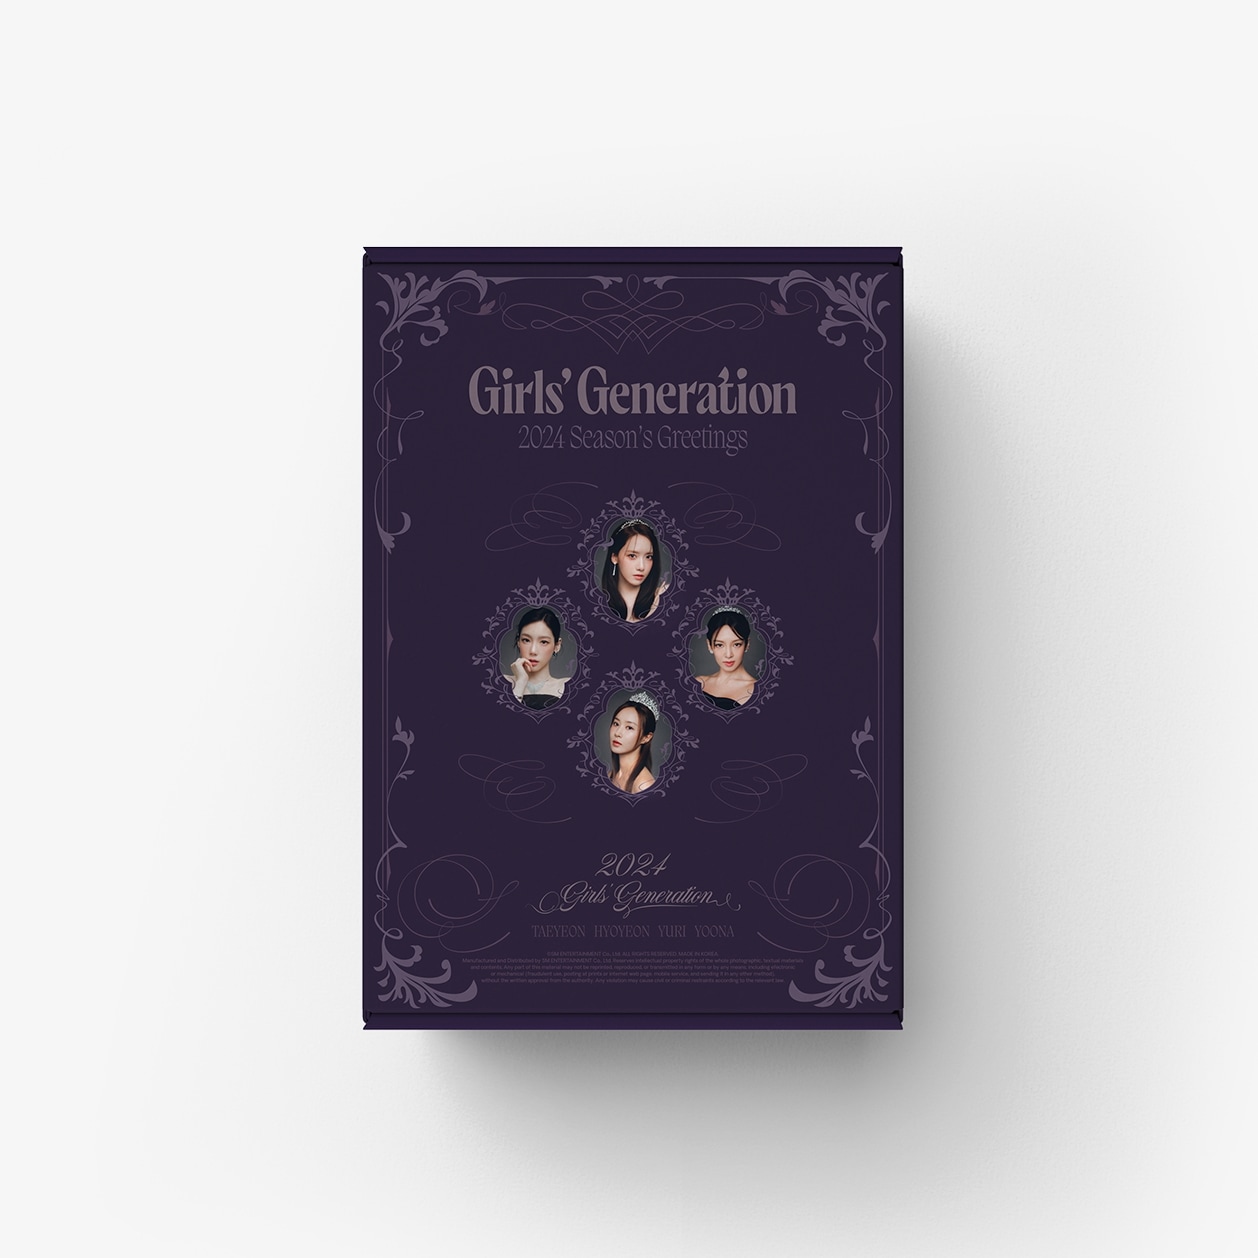 SMエンターテインメント[公式特典付き] Girls Generation - 2024 SEASONS GREETINGS シーグリ / カレンダー / シーズングリーティング/特典トレカ1セット